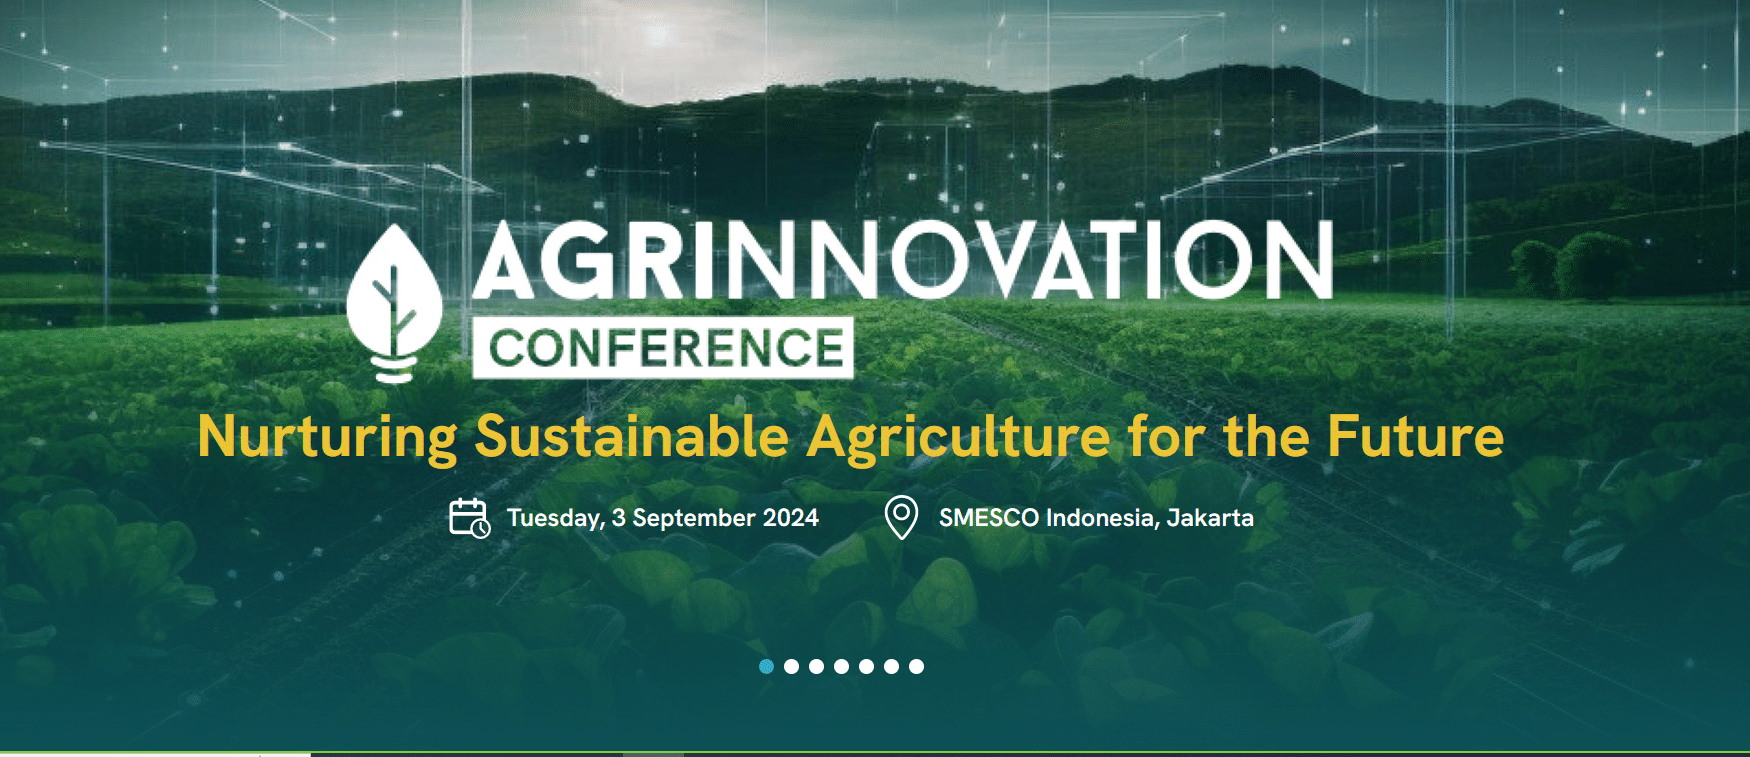 Agrinnovation Conference 2024